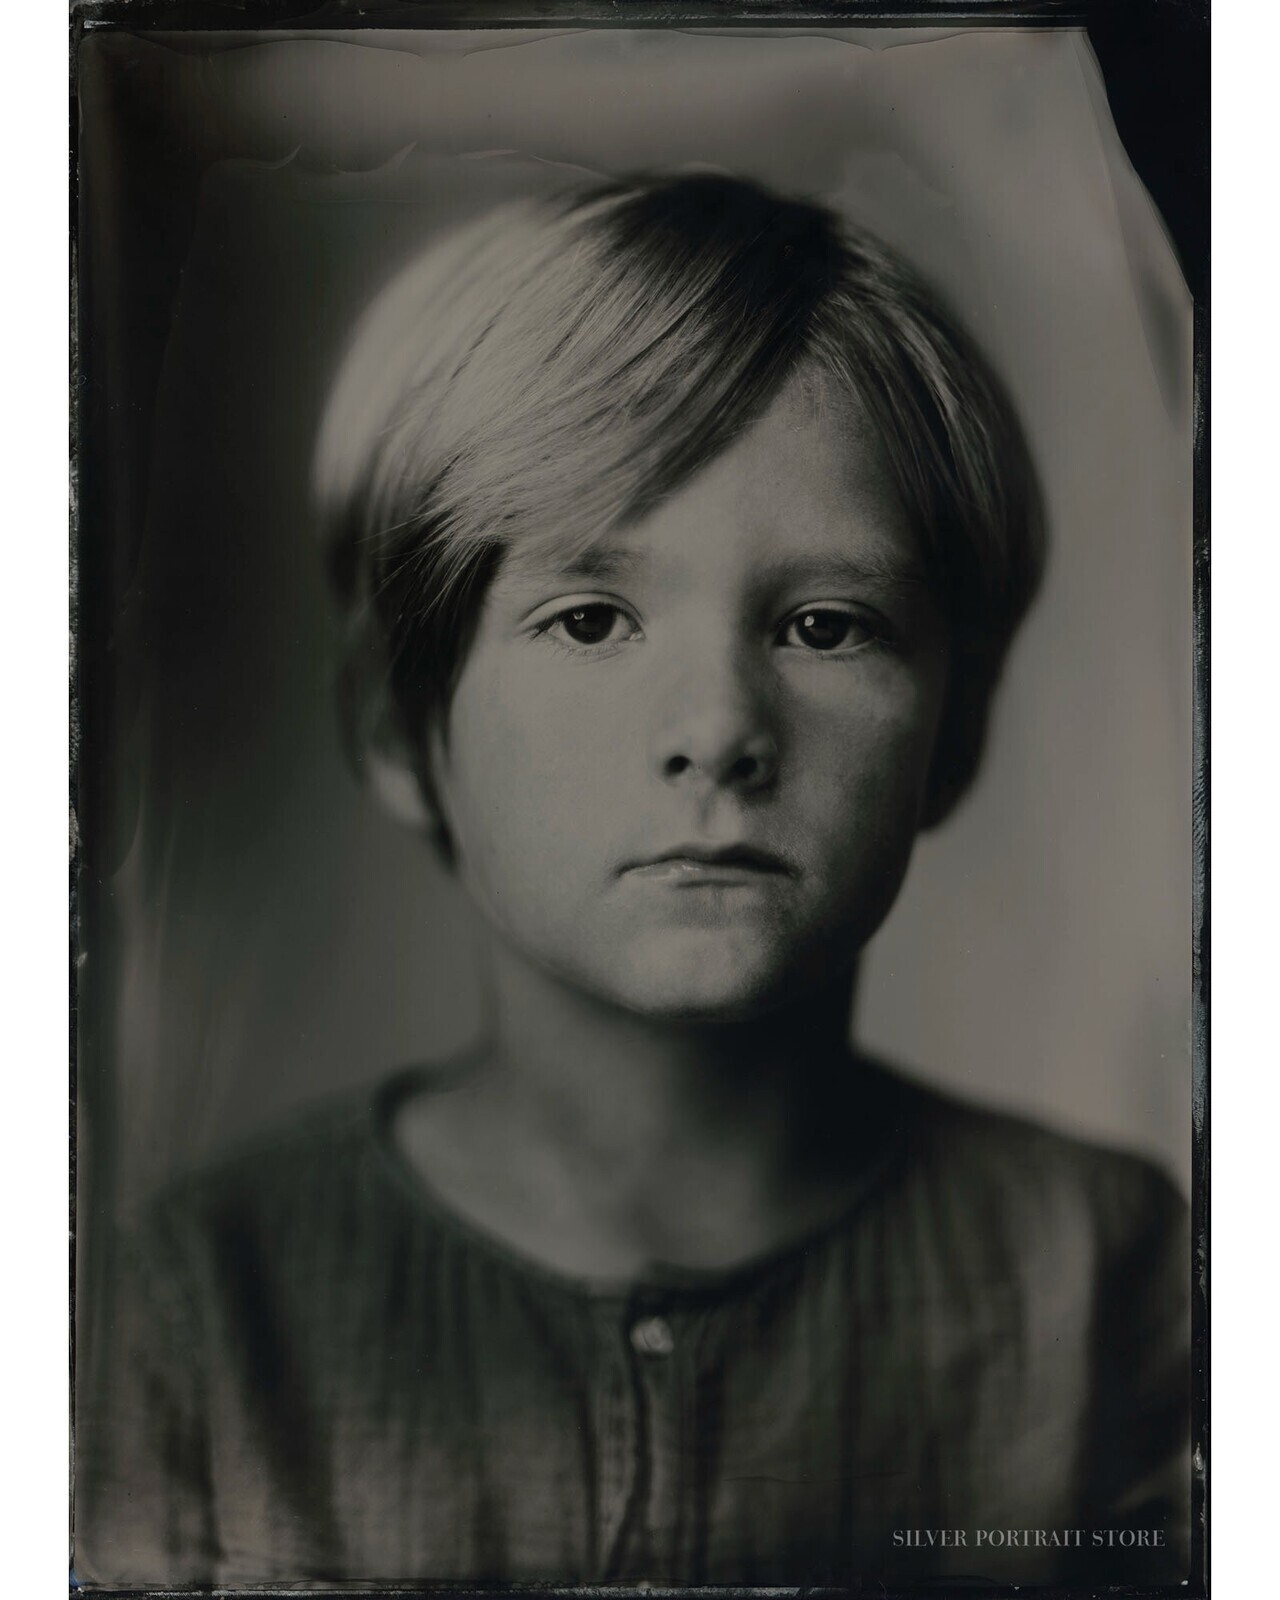 Ezra-Silver Portrait Store-Wet plate collodion Tintype 13 x 18 cm.